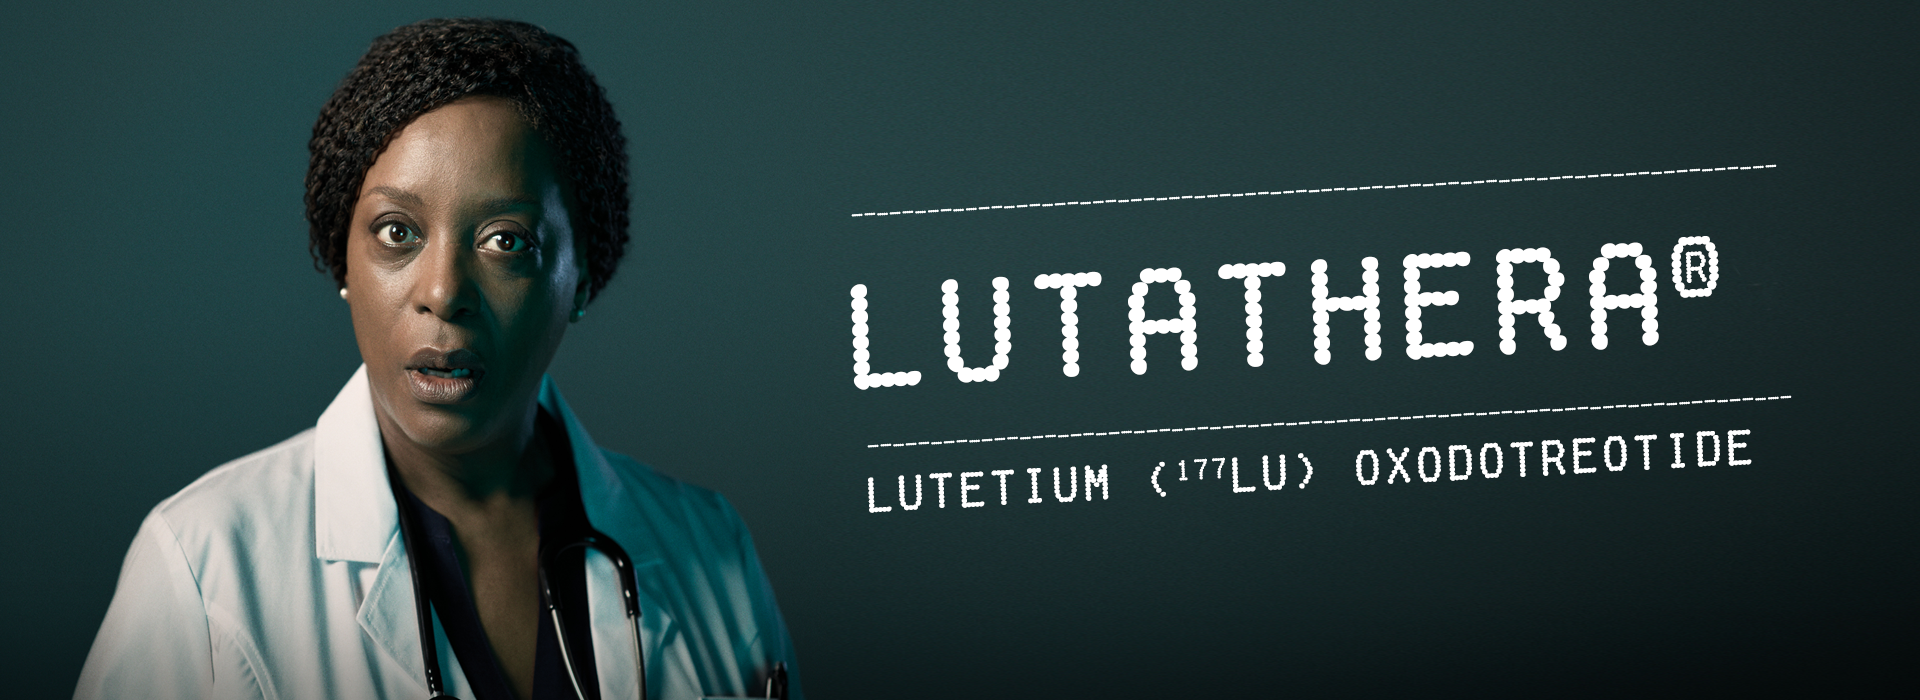 Top banner: Lutathera® lutetium (177LU) oxodotreotide. Image of a female doctor.